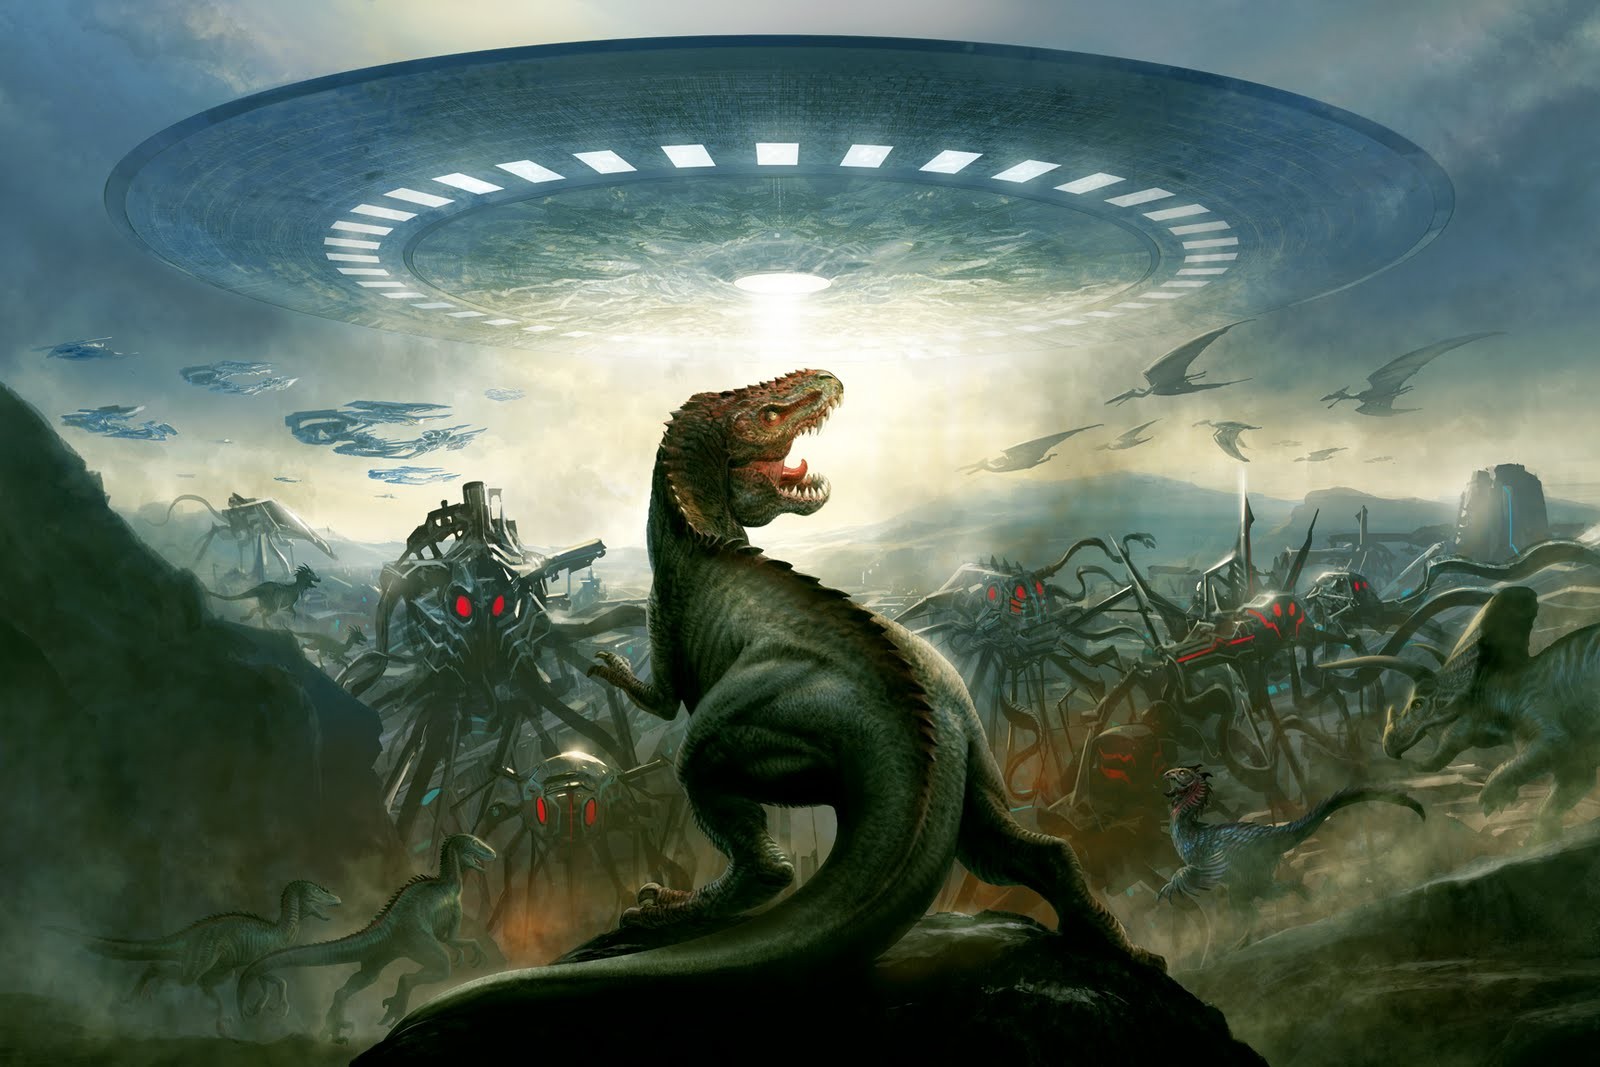 General 1600x1067 aliens digital art flying saucers spaceship dinosaurs UFO animals